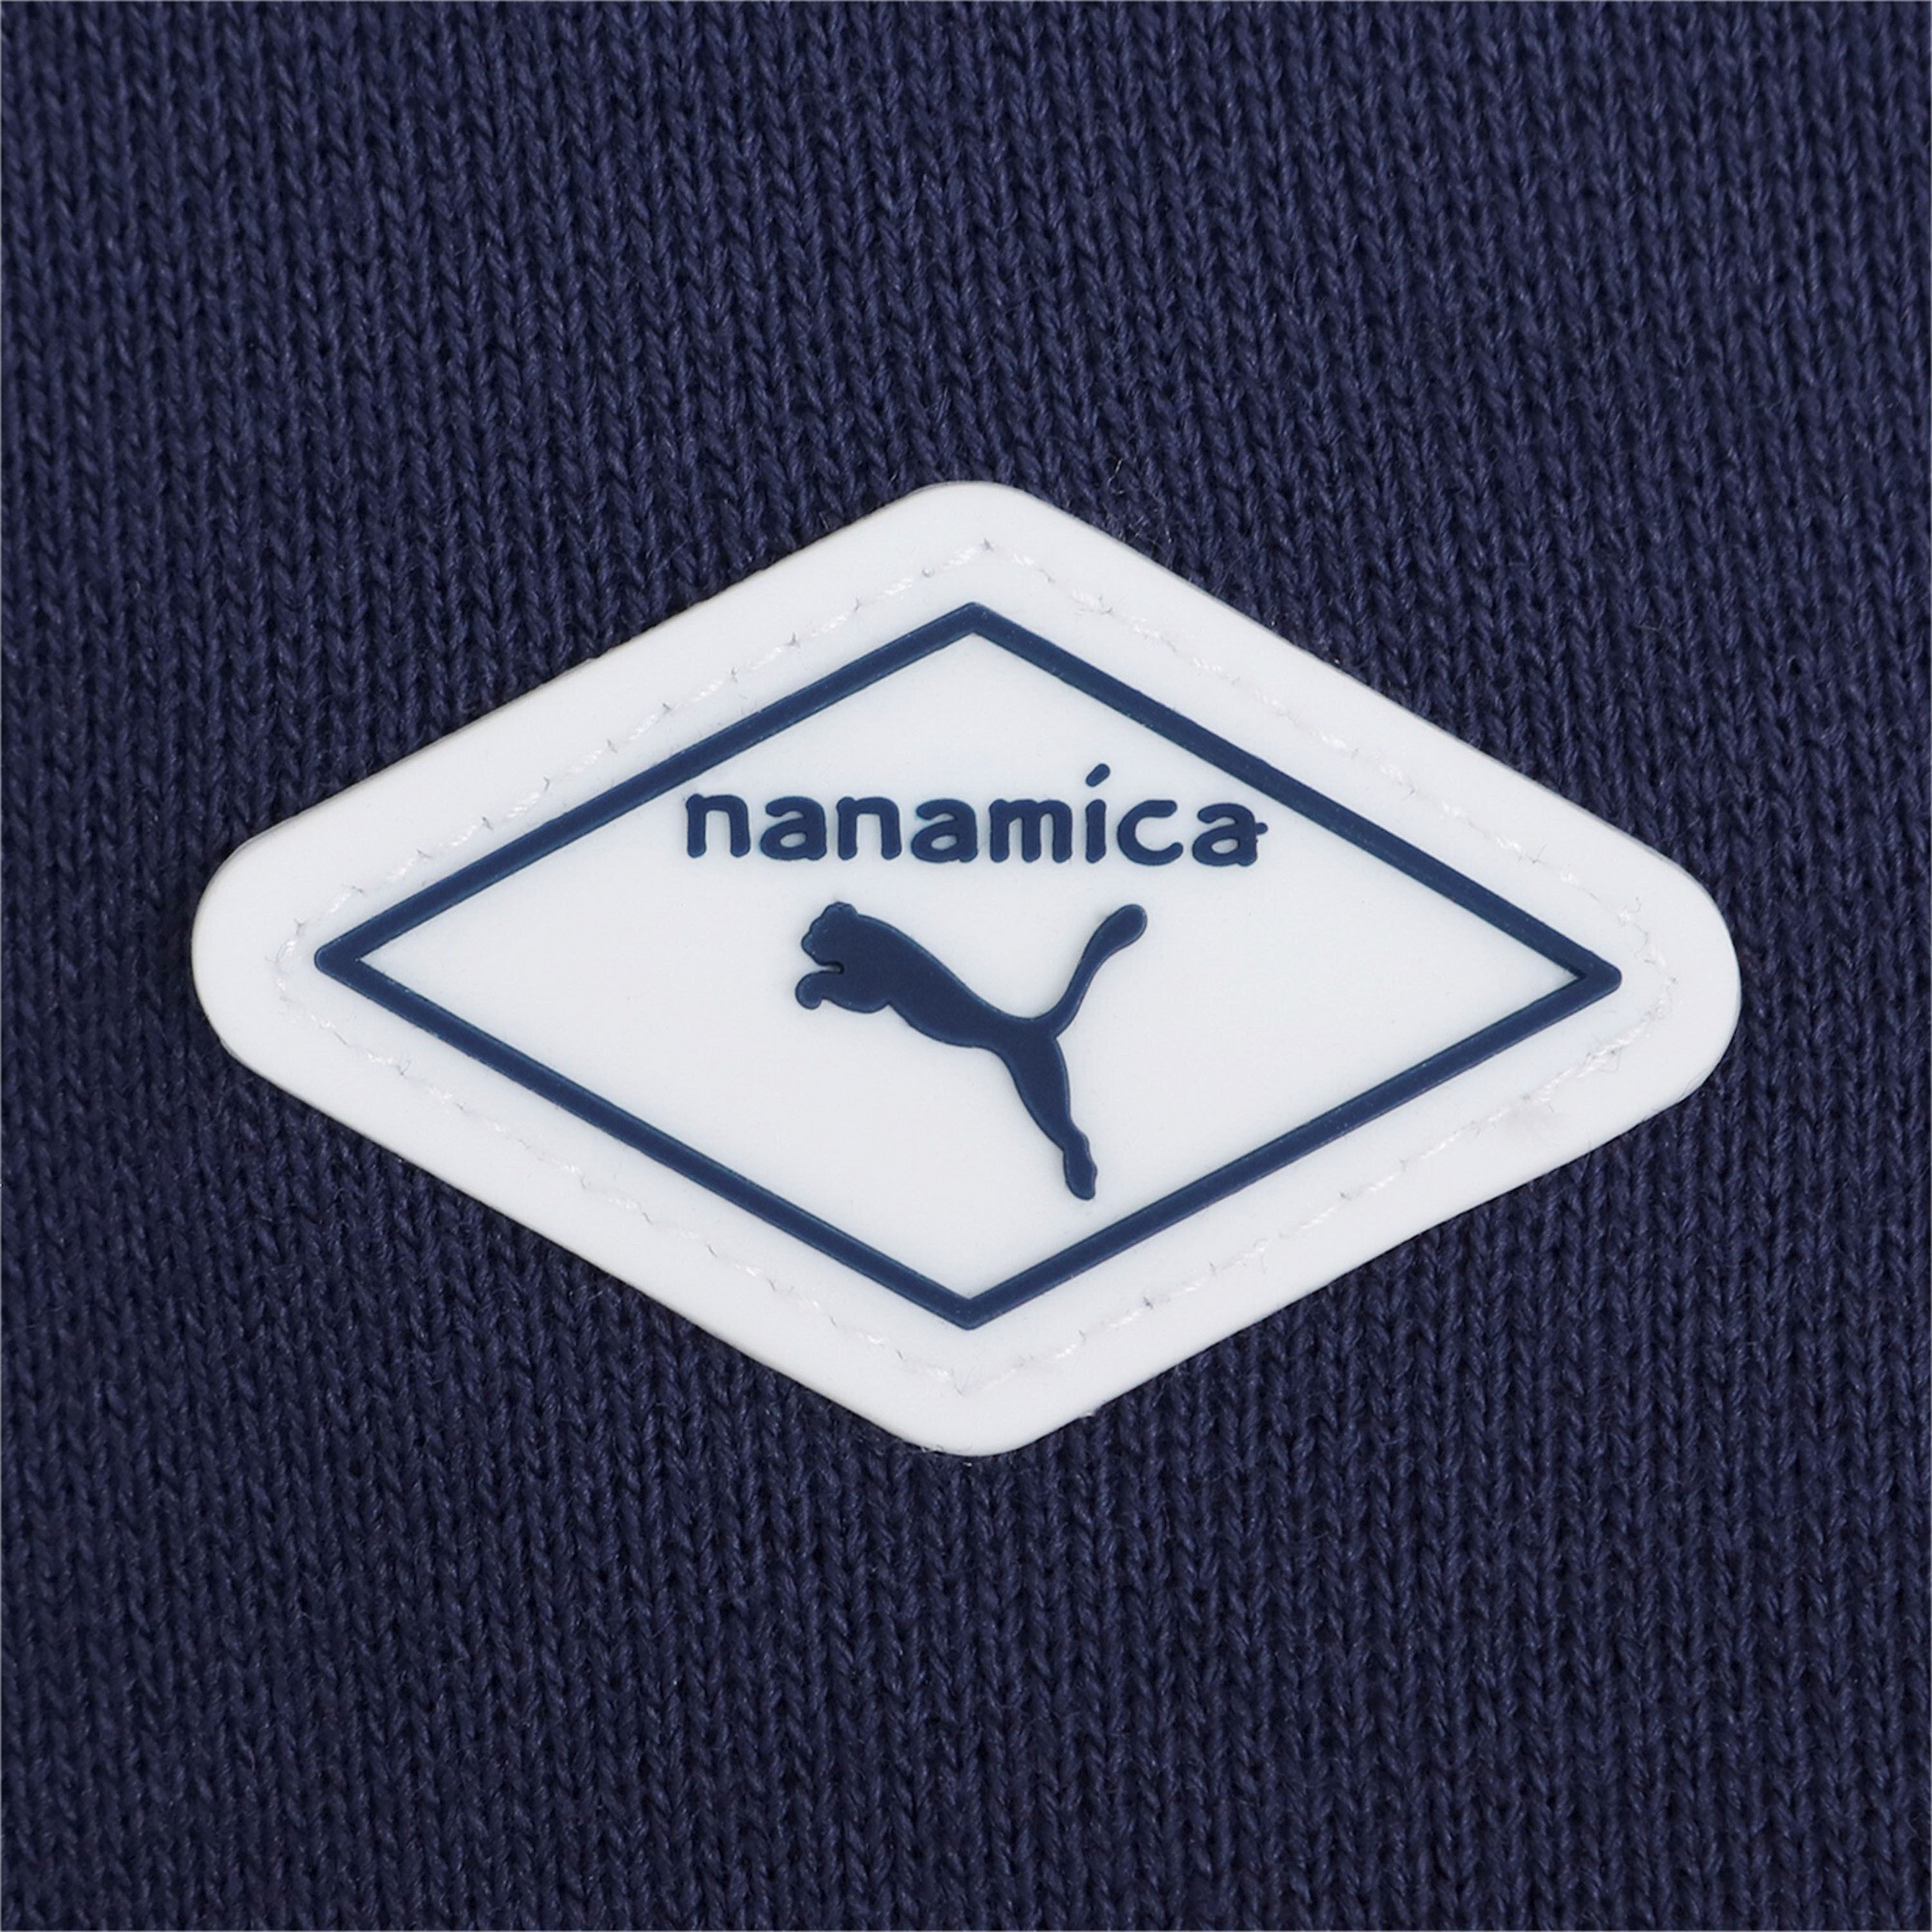 PUMA x nanamica Pullover Hooded Sweatshirt (Navy) - 53985206 - Consortium